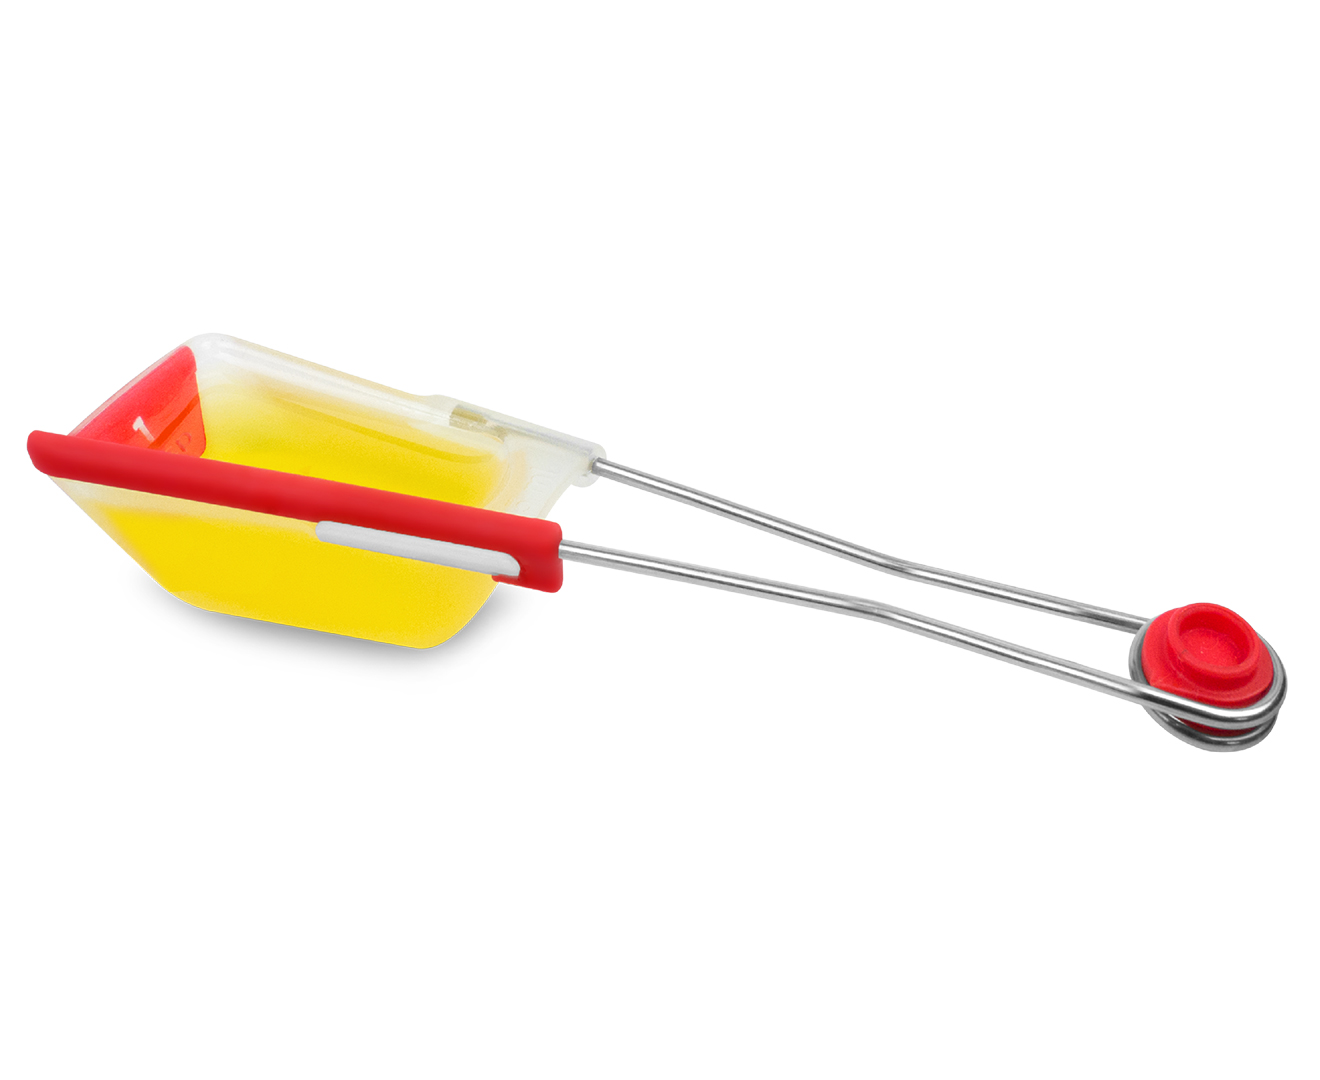 Levoons Self-Leveling Measuring Spoon Set of 4 x Dreamfarm DFLV2225, Red